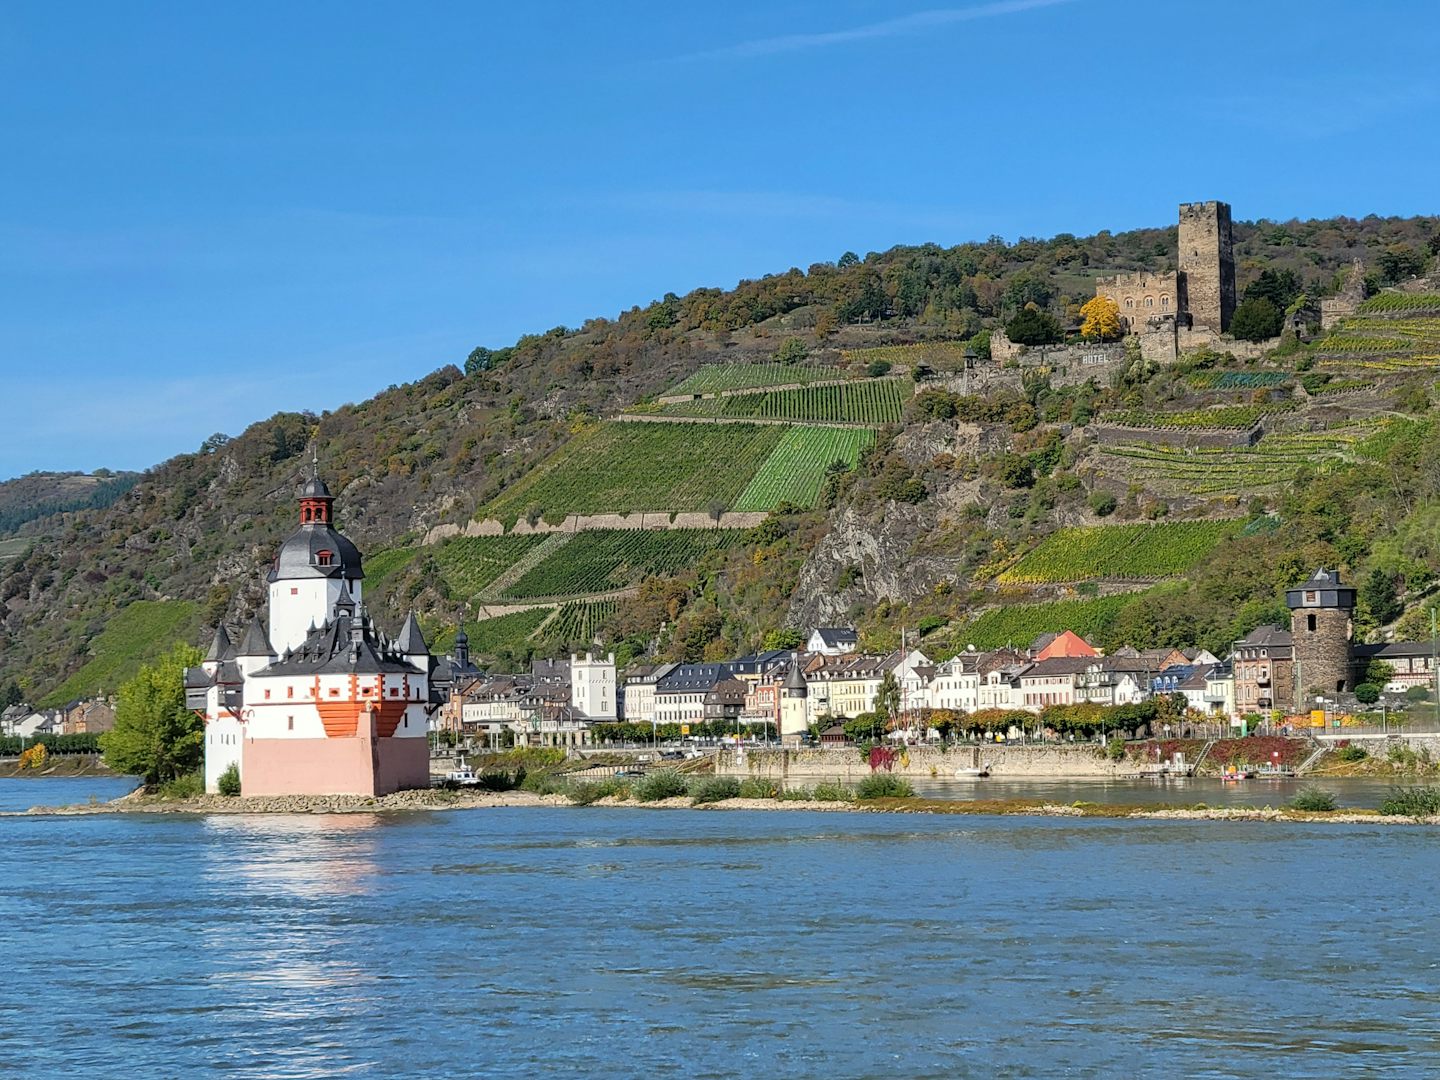 Sailing down the Rhine